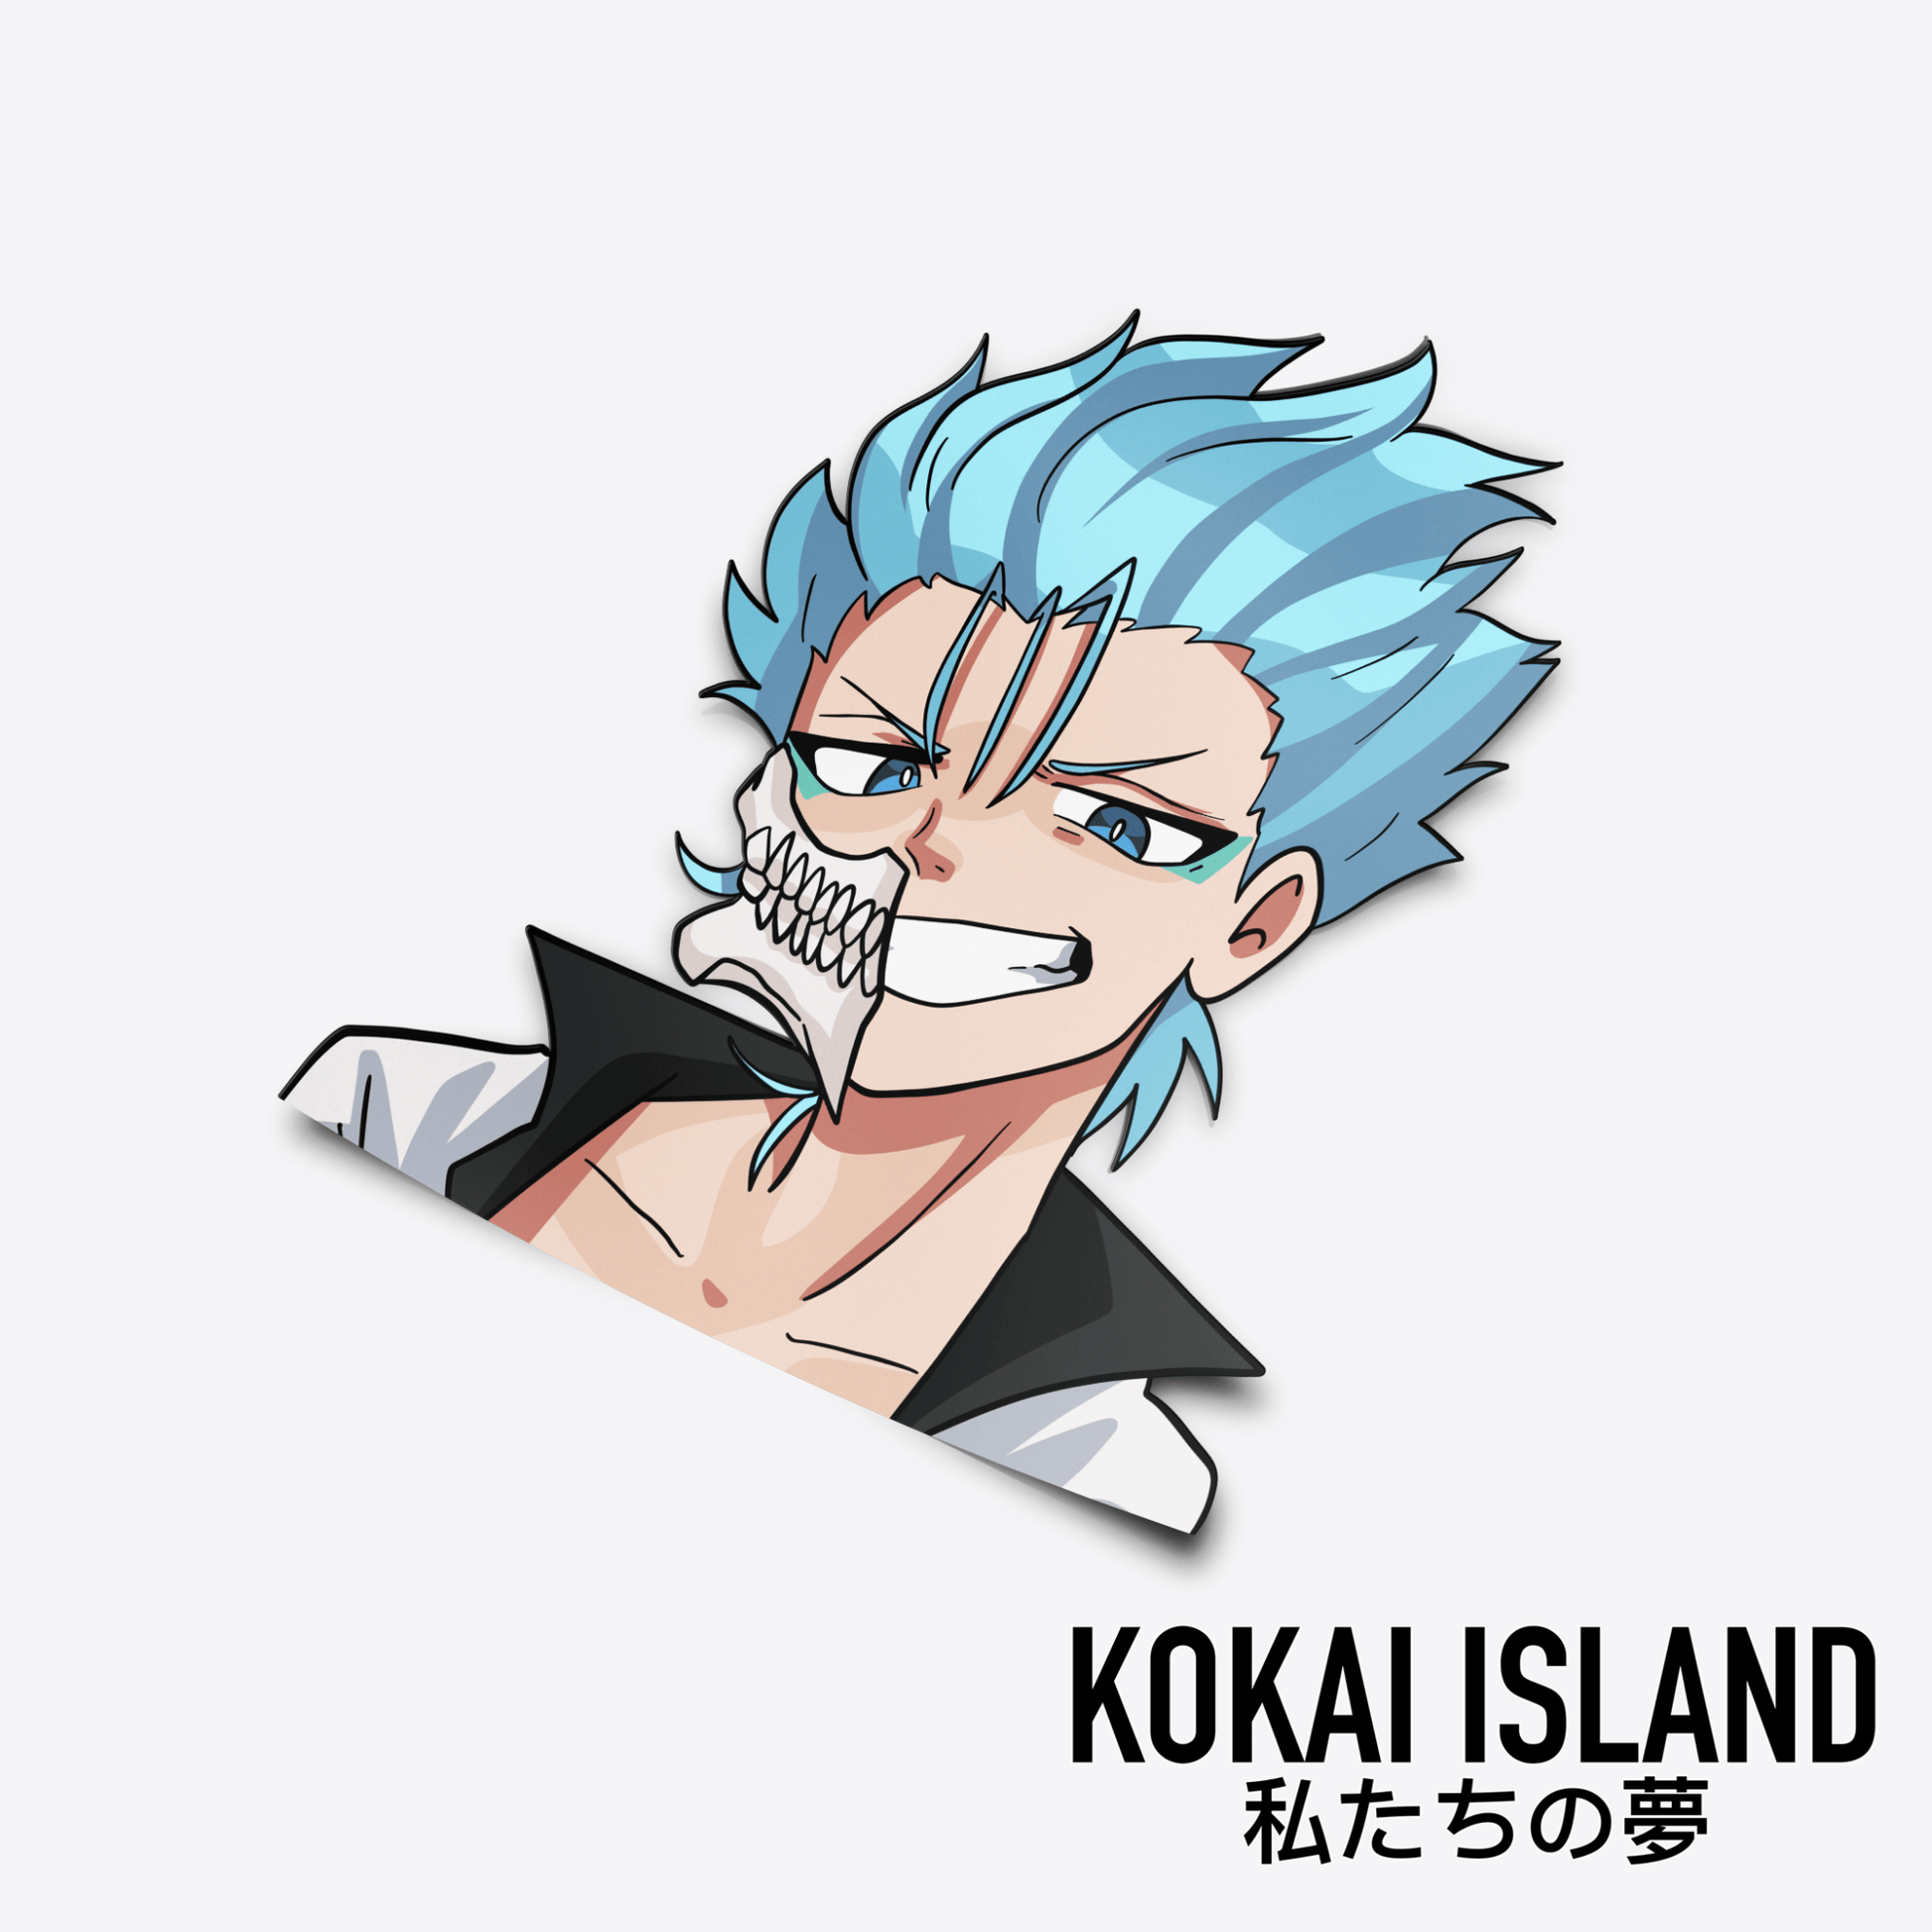 Blue Haired Anti Hero DecalDecalKokai Island